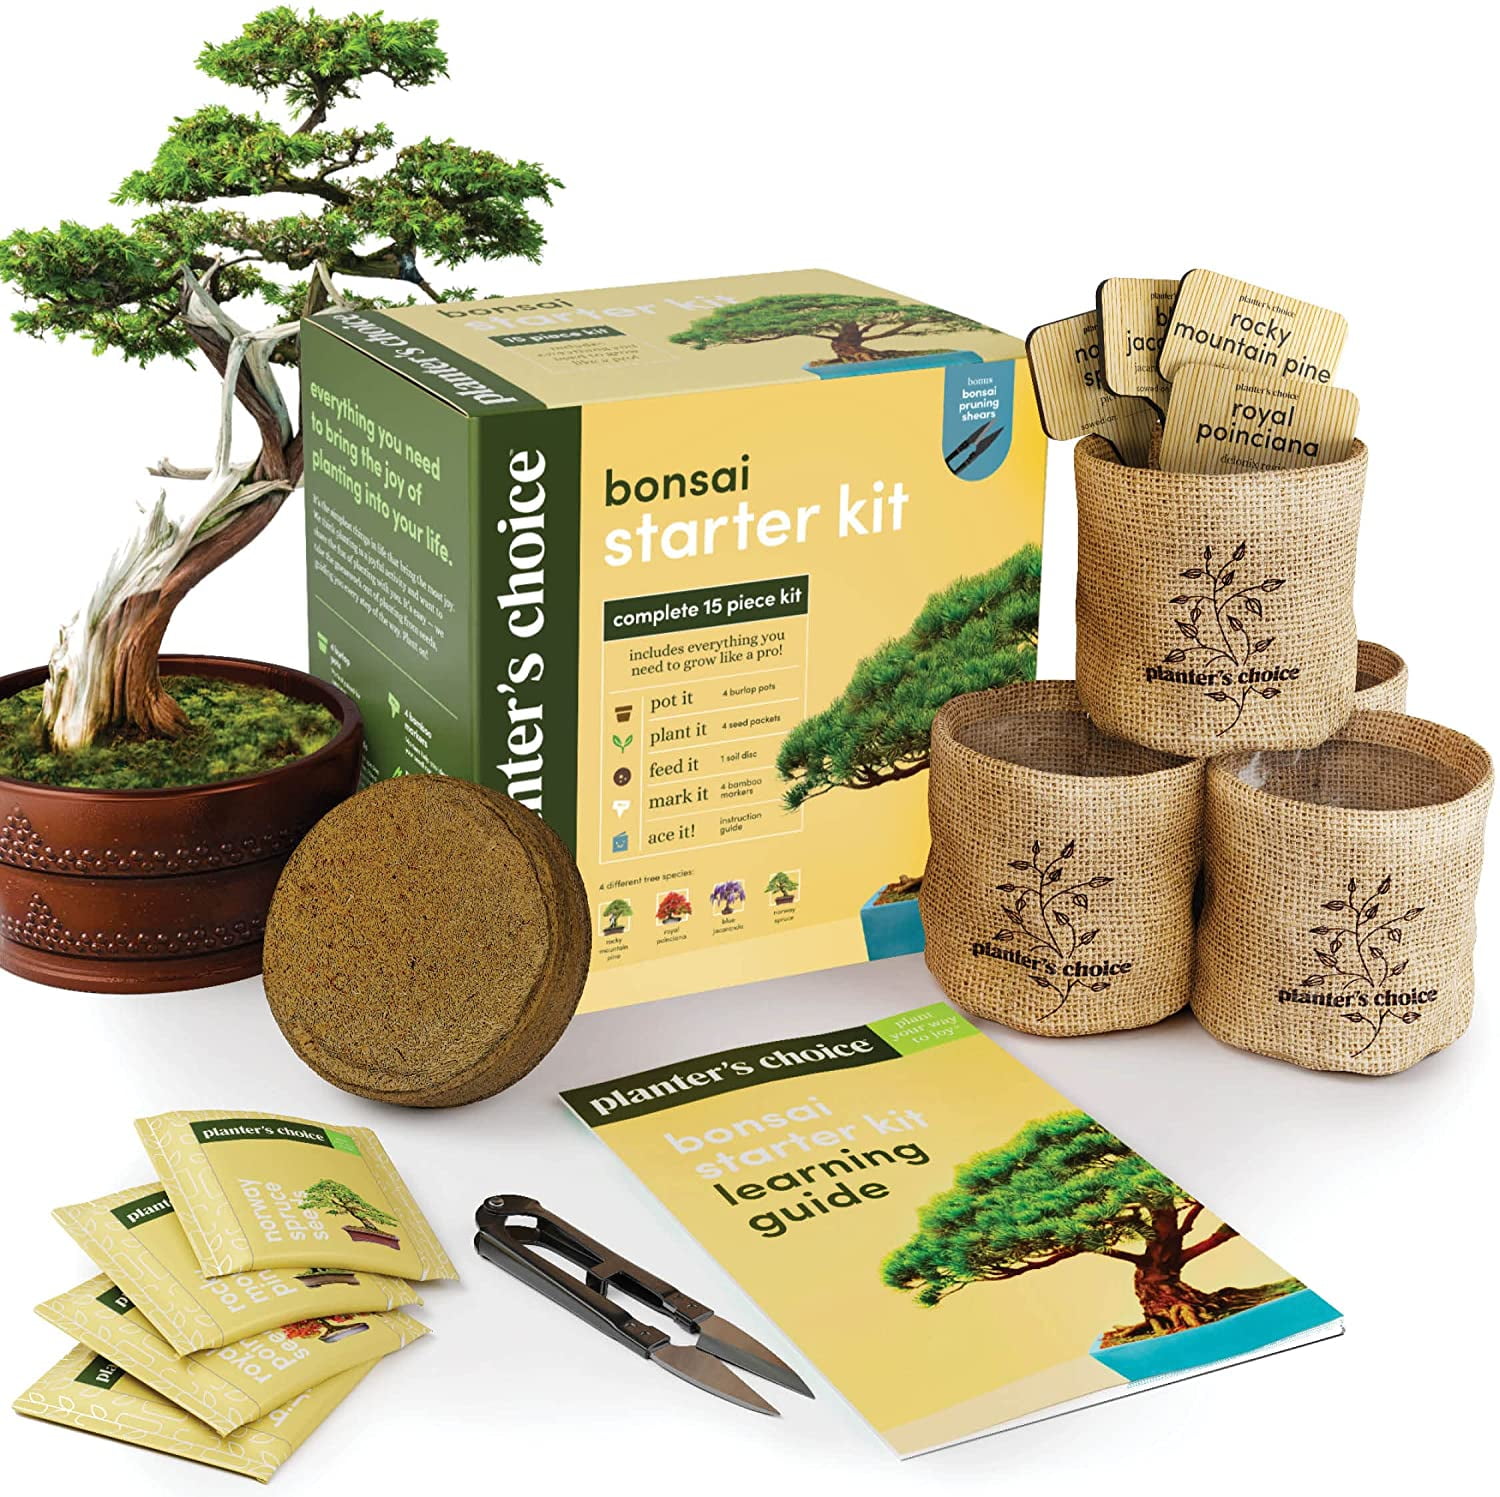 MASTER GARDENER — Bonsai gardening for everyone with small start